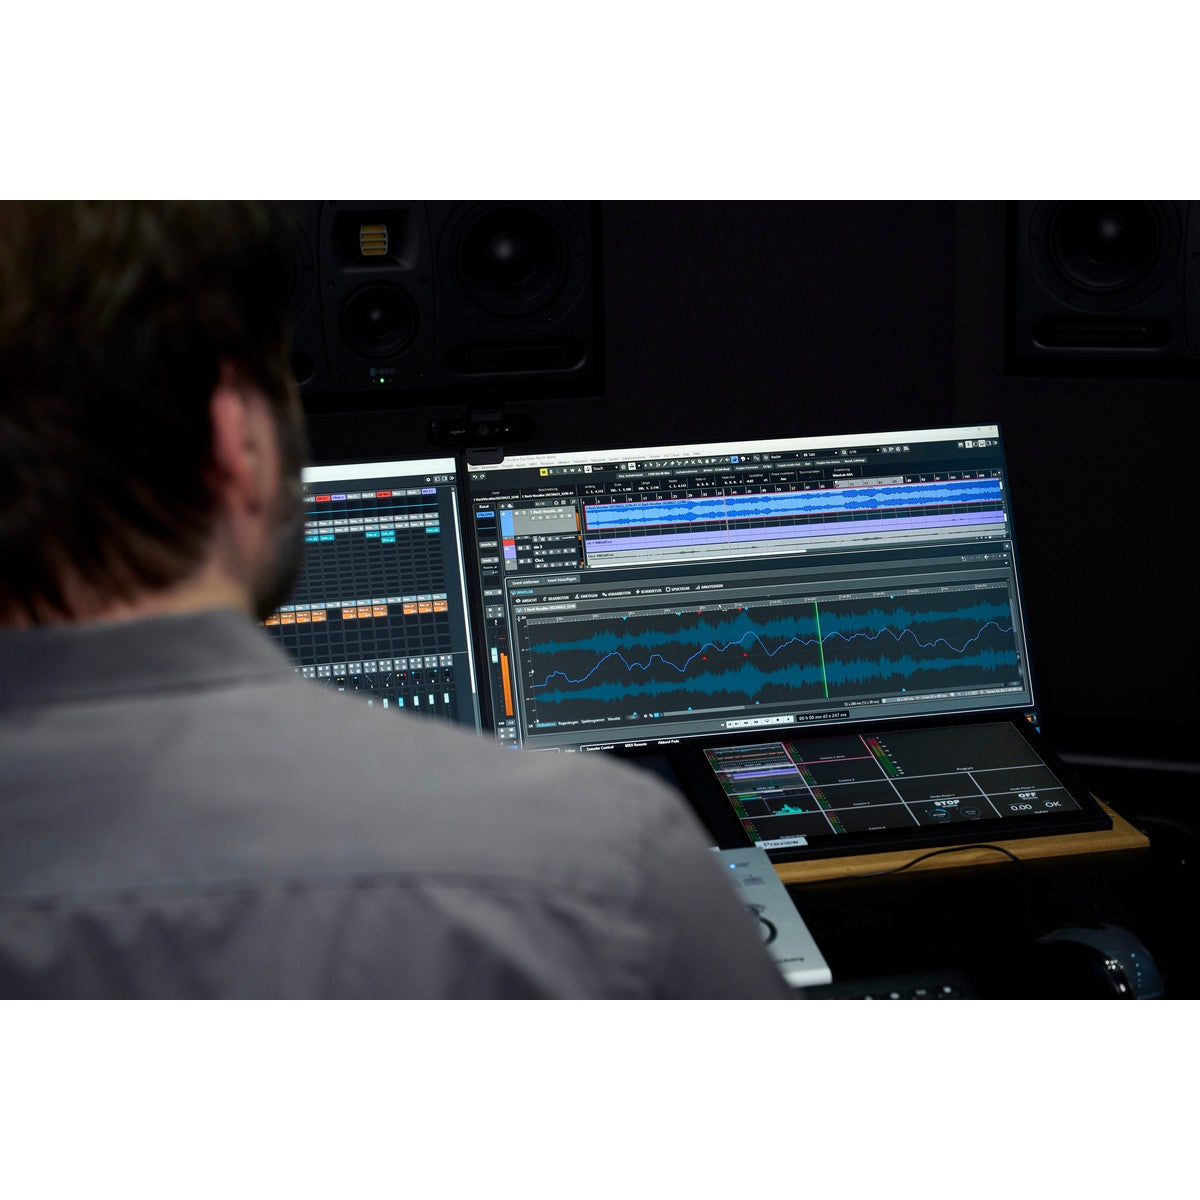 Steinberg WaveLab Elements 12 Audio Mastering Music Software, Download